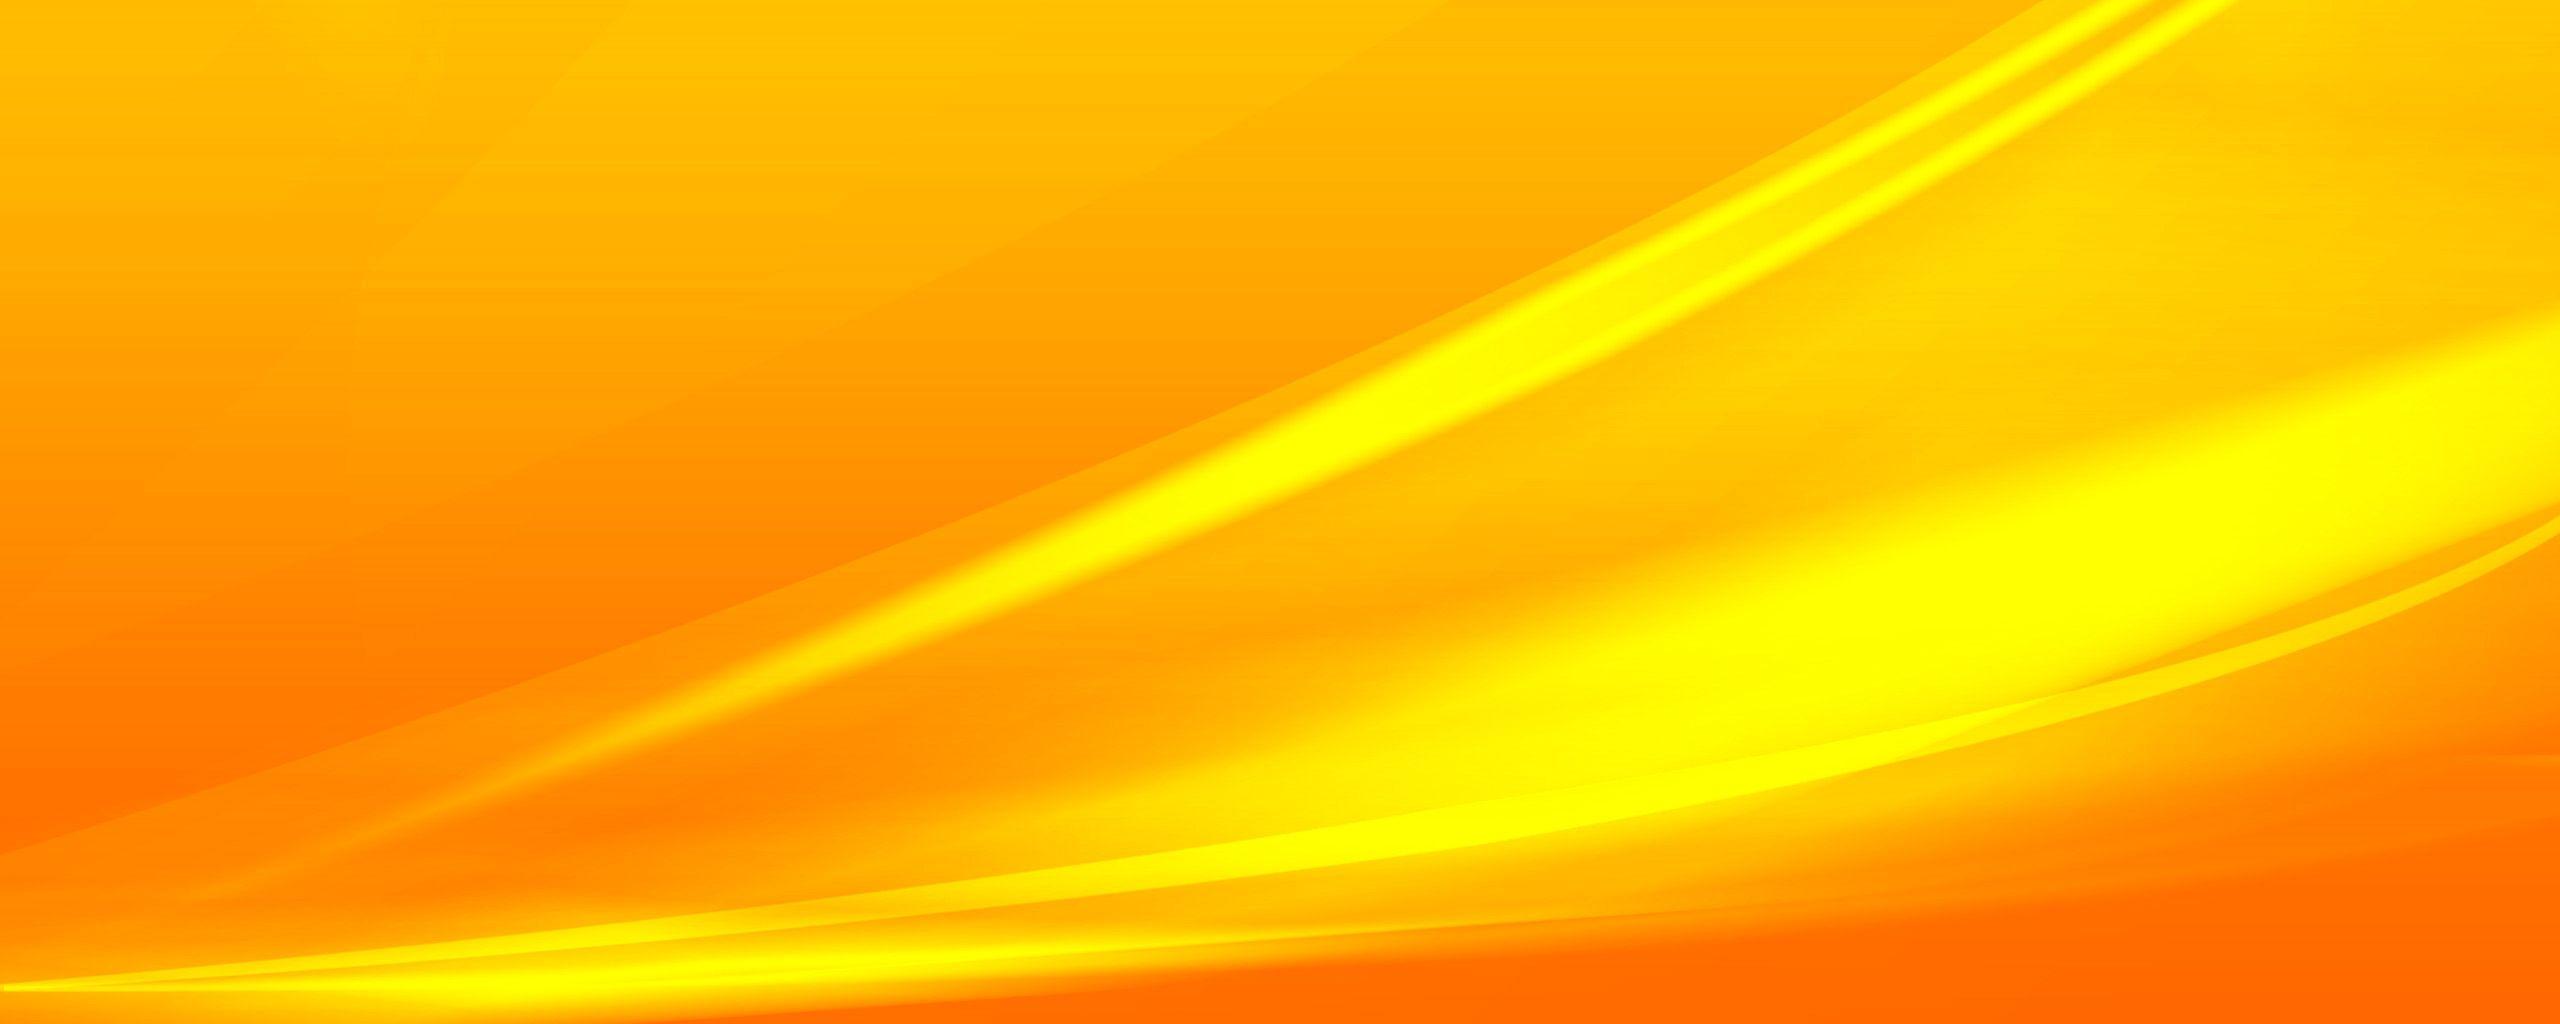 Fantastis 23+ Background Gradasi Warna Kuning Orange - Bari Gambar